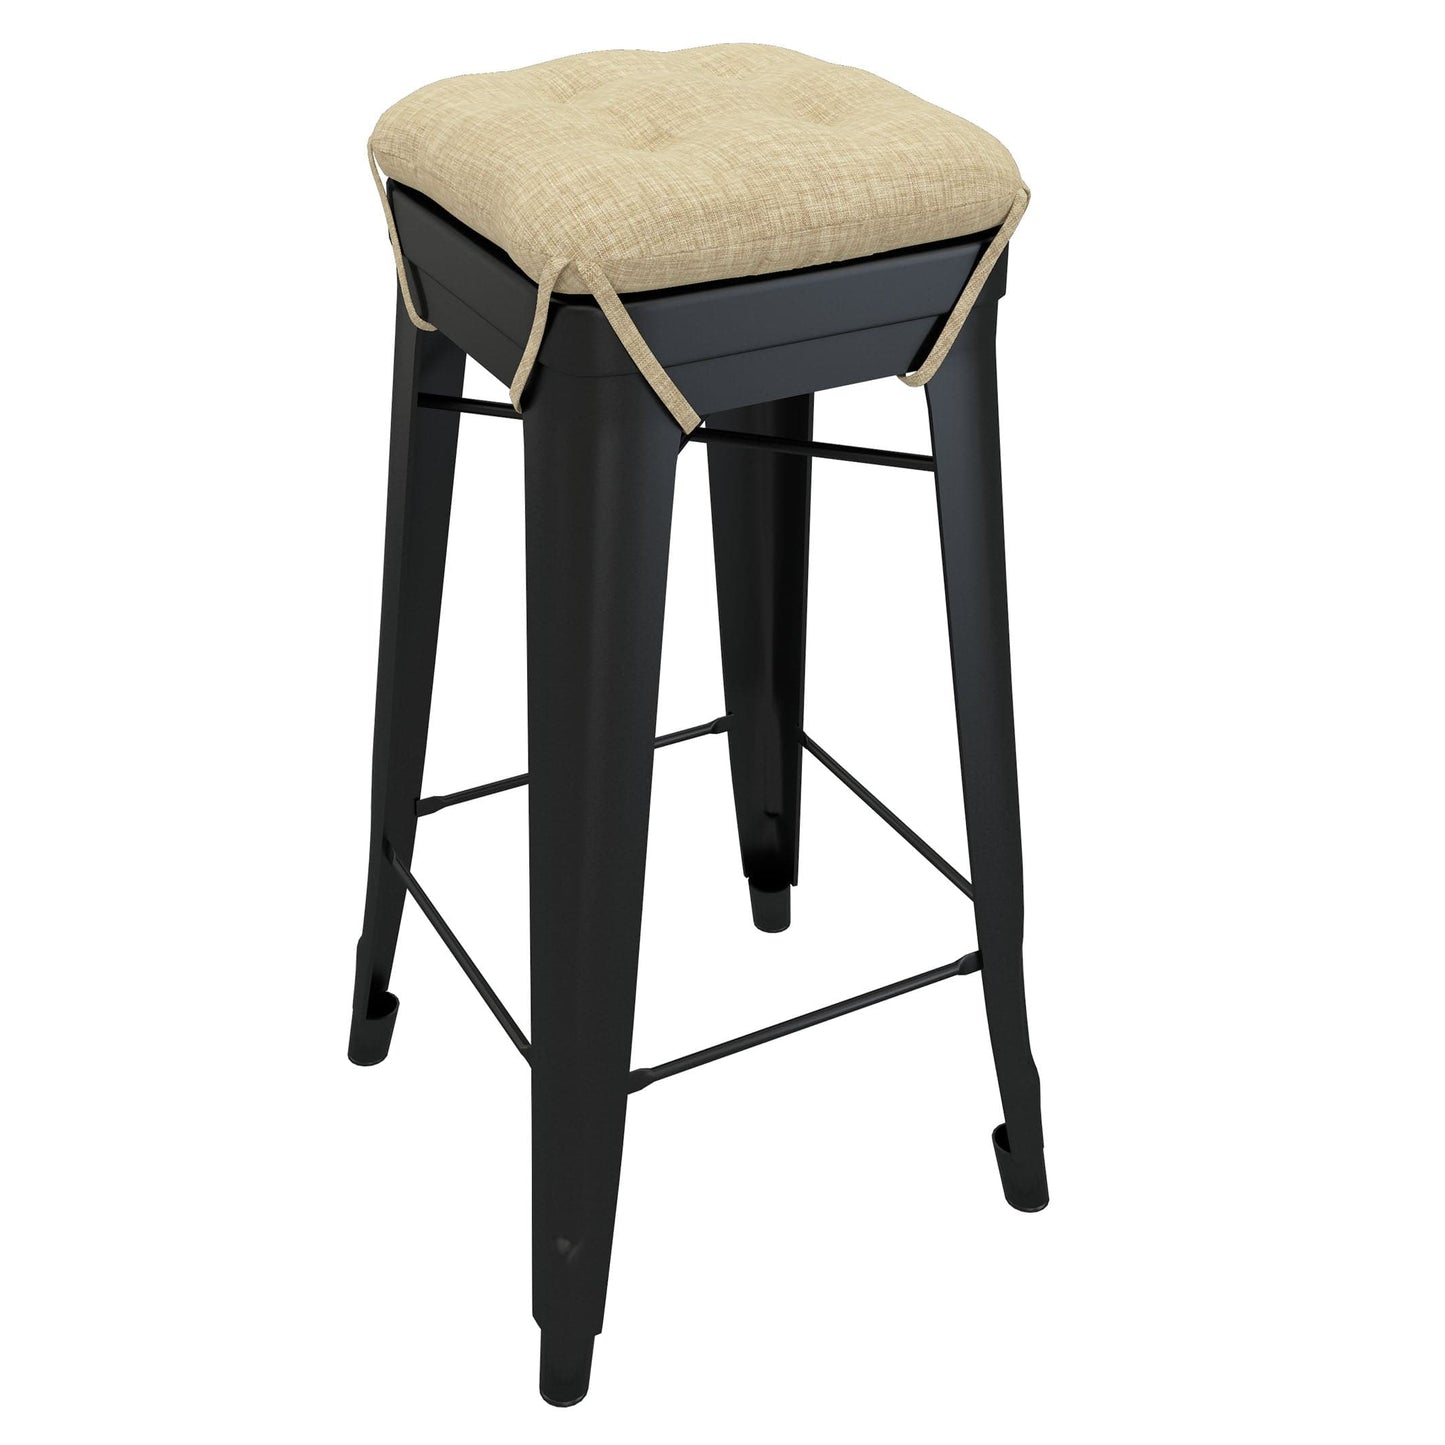 Hayden Beige Square Industrial Tolix Stool Cushion on black tolix stool | Barnett Home Decor